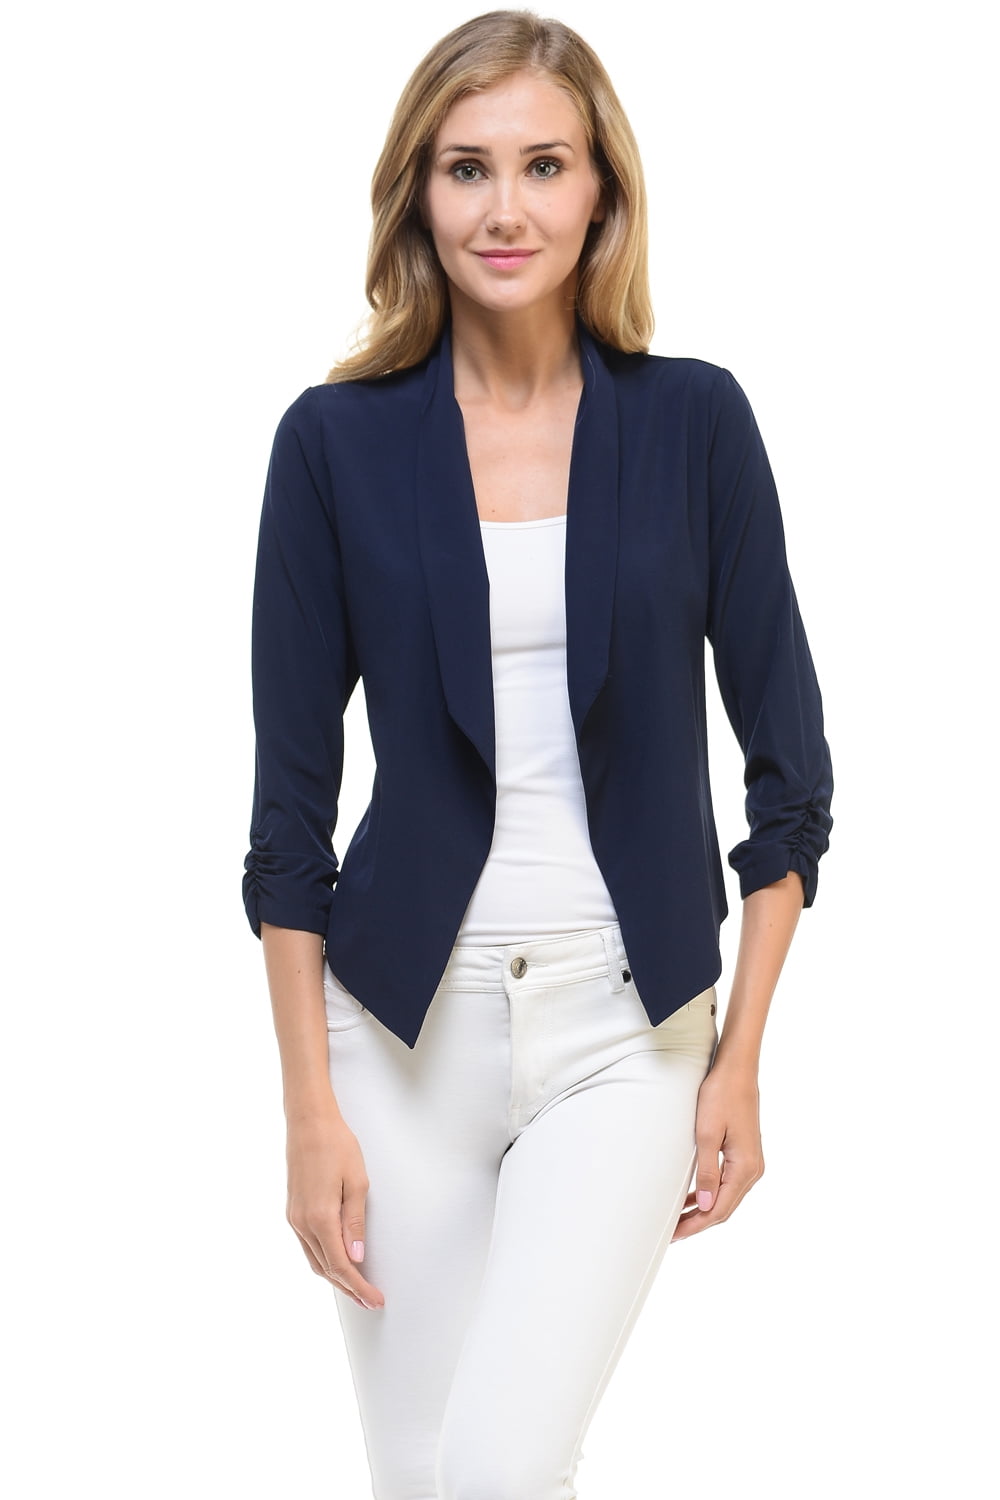 FCMKBT Women's Blazer Jacket,Plus Size 3/4 Ruched Sleeve Lapel Cardigan Ladies Stretchy Slim Open Front Lightweight Office Coat